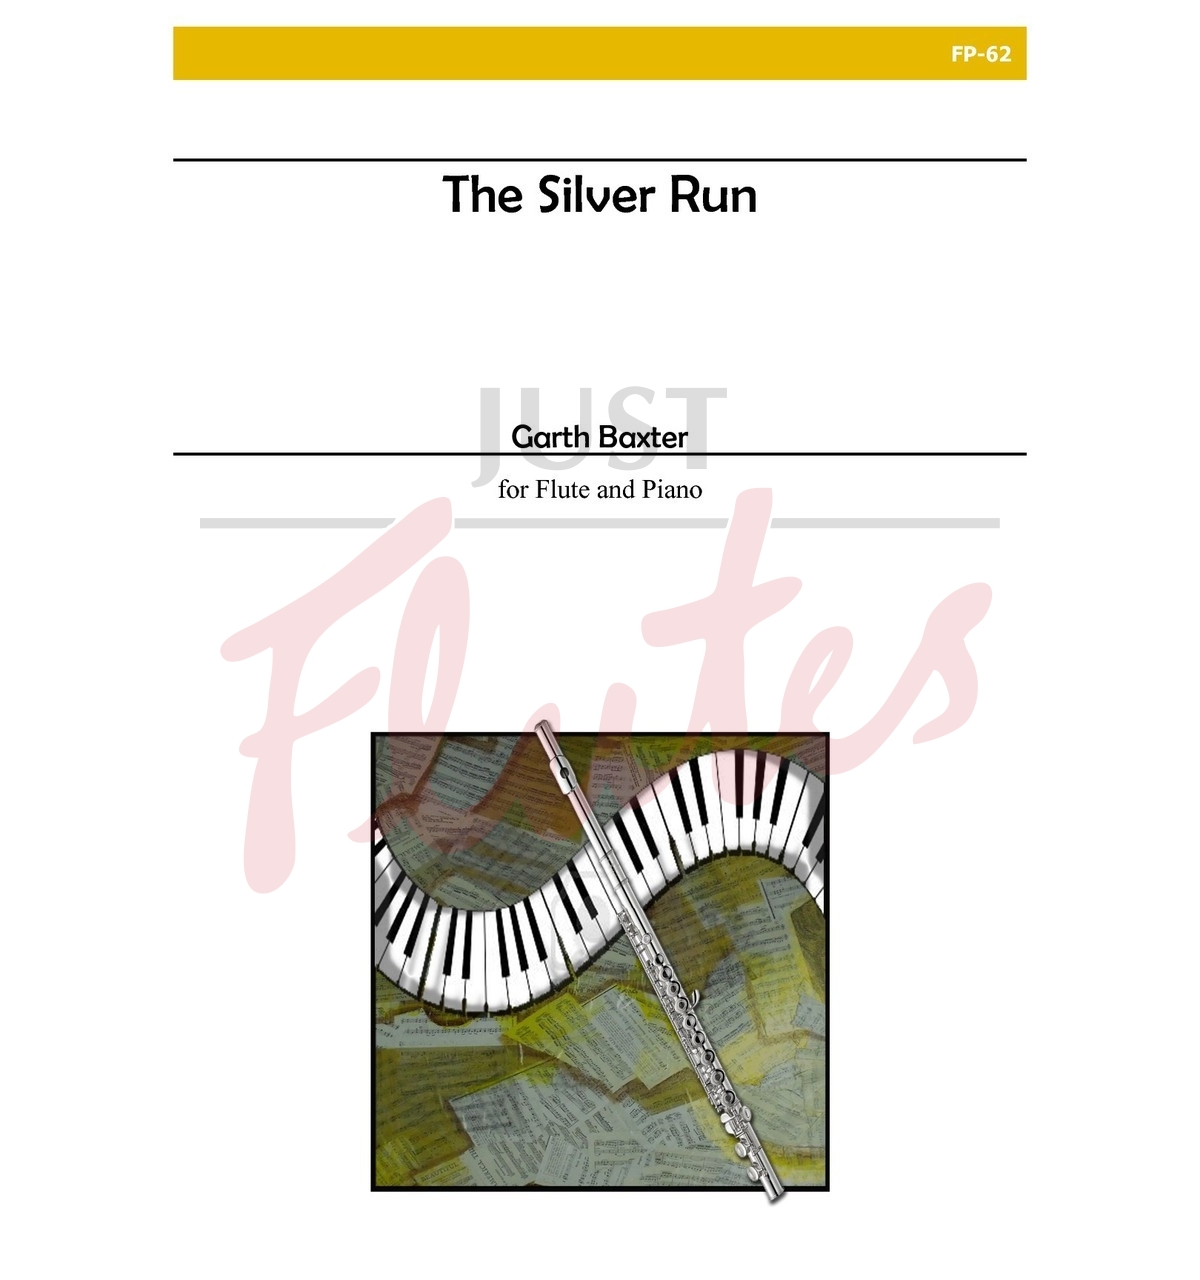 The Silver Run